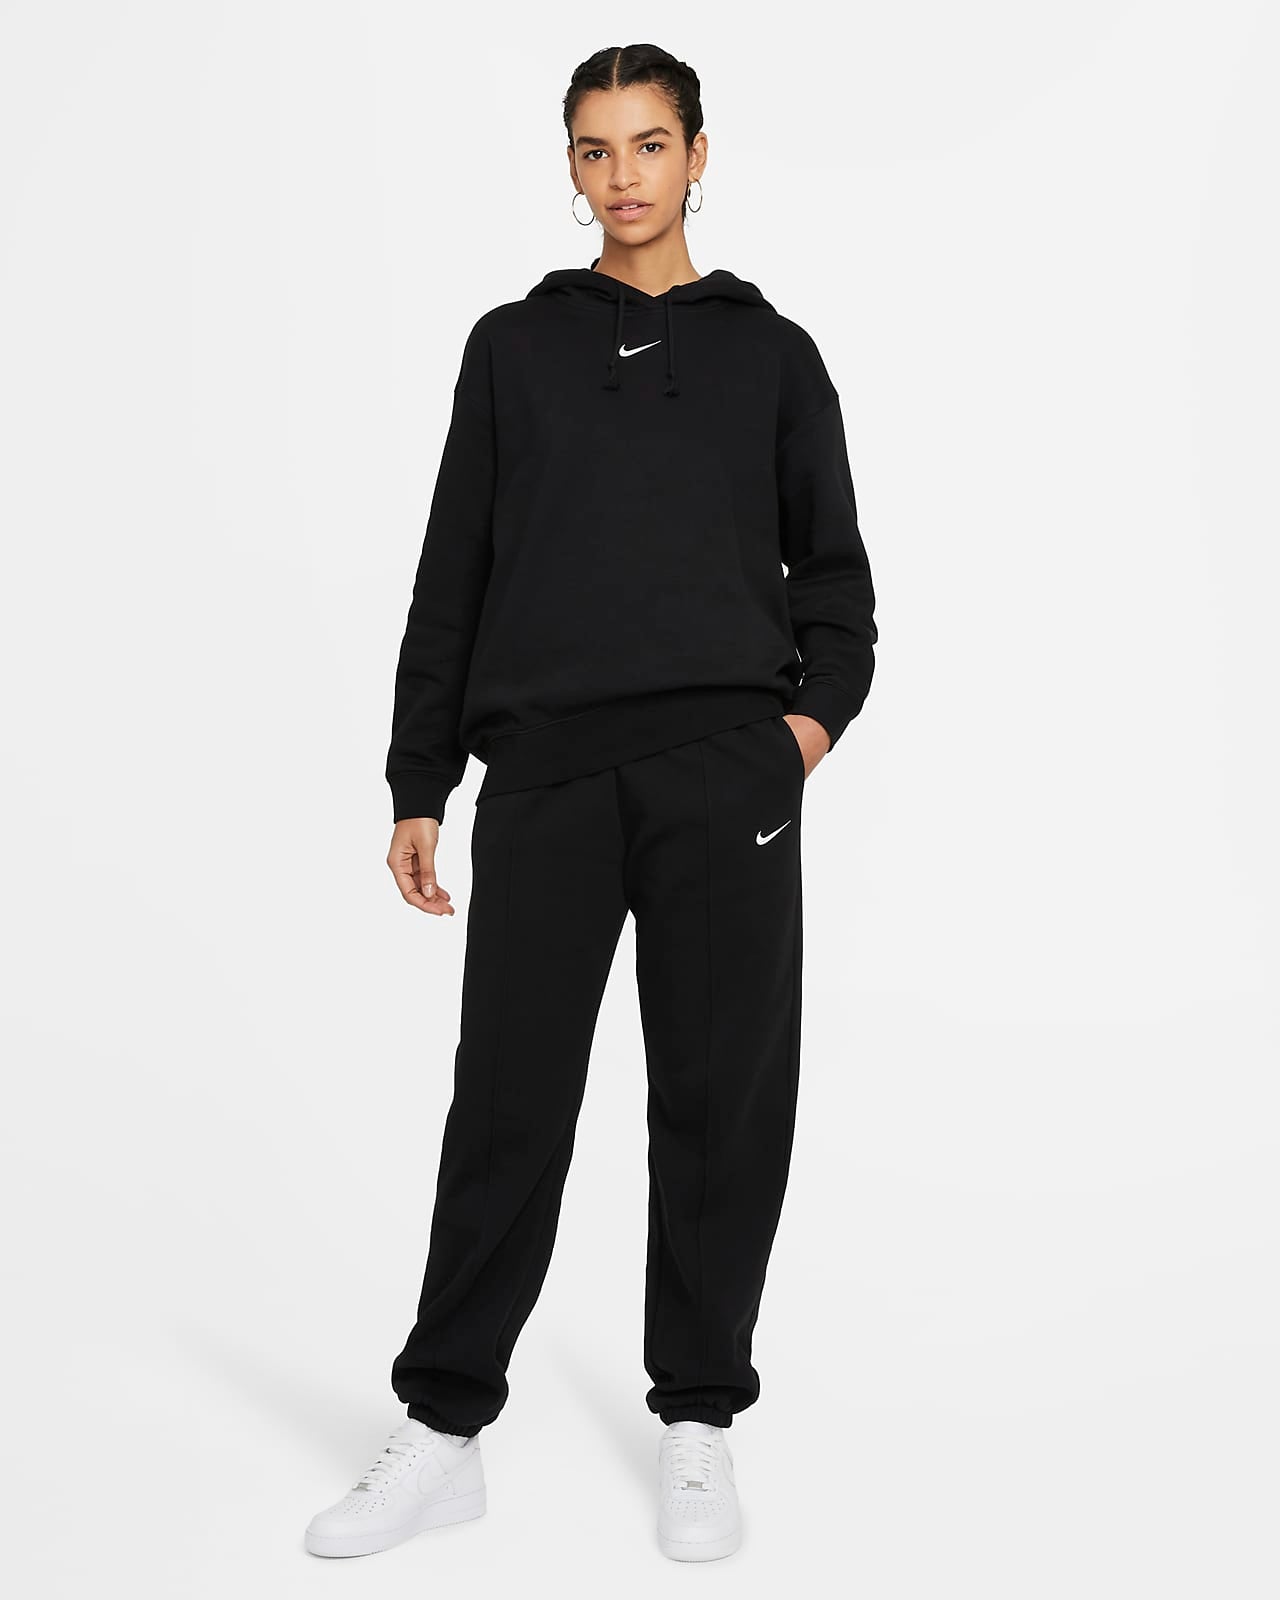 Nike Sportswear Collection Essentials Loose Fit Fleece Hoodie WOMEN